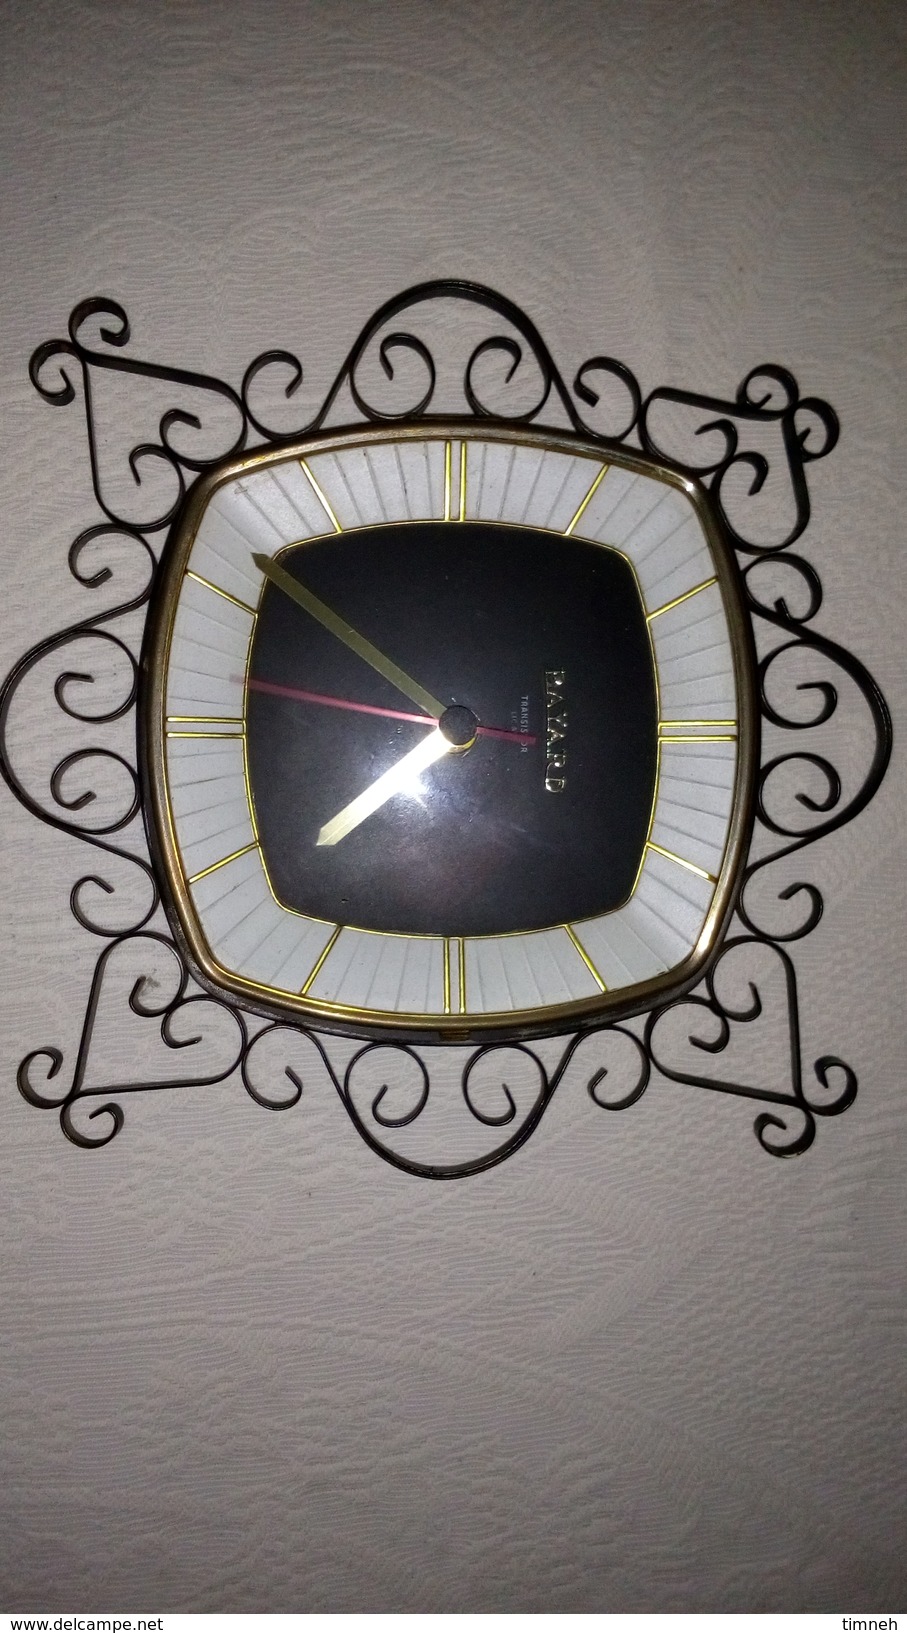 BAYARD TRANSISTOR - HORLOGE MURALE - CADRAN NOIR 16x15cm - DECO Fer Forgé (4cm) - FONCTIONNE - RETRO - Horloges